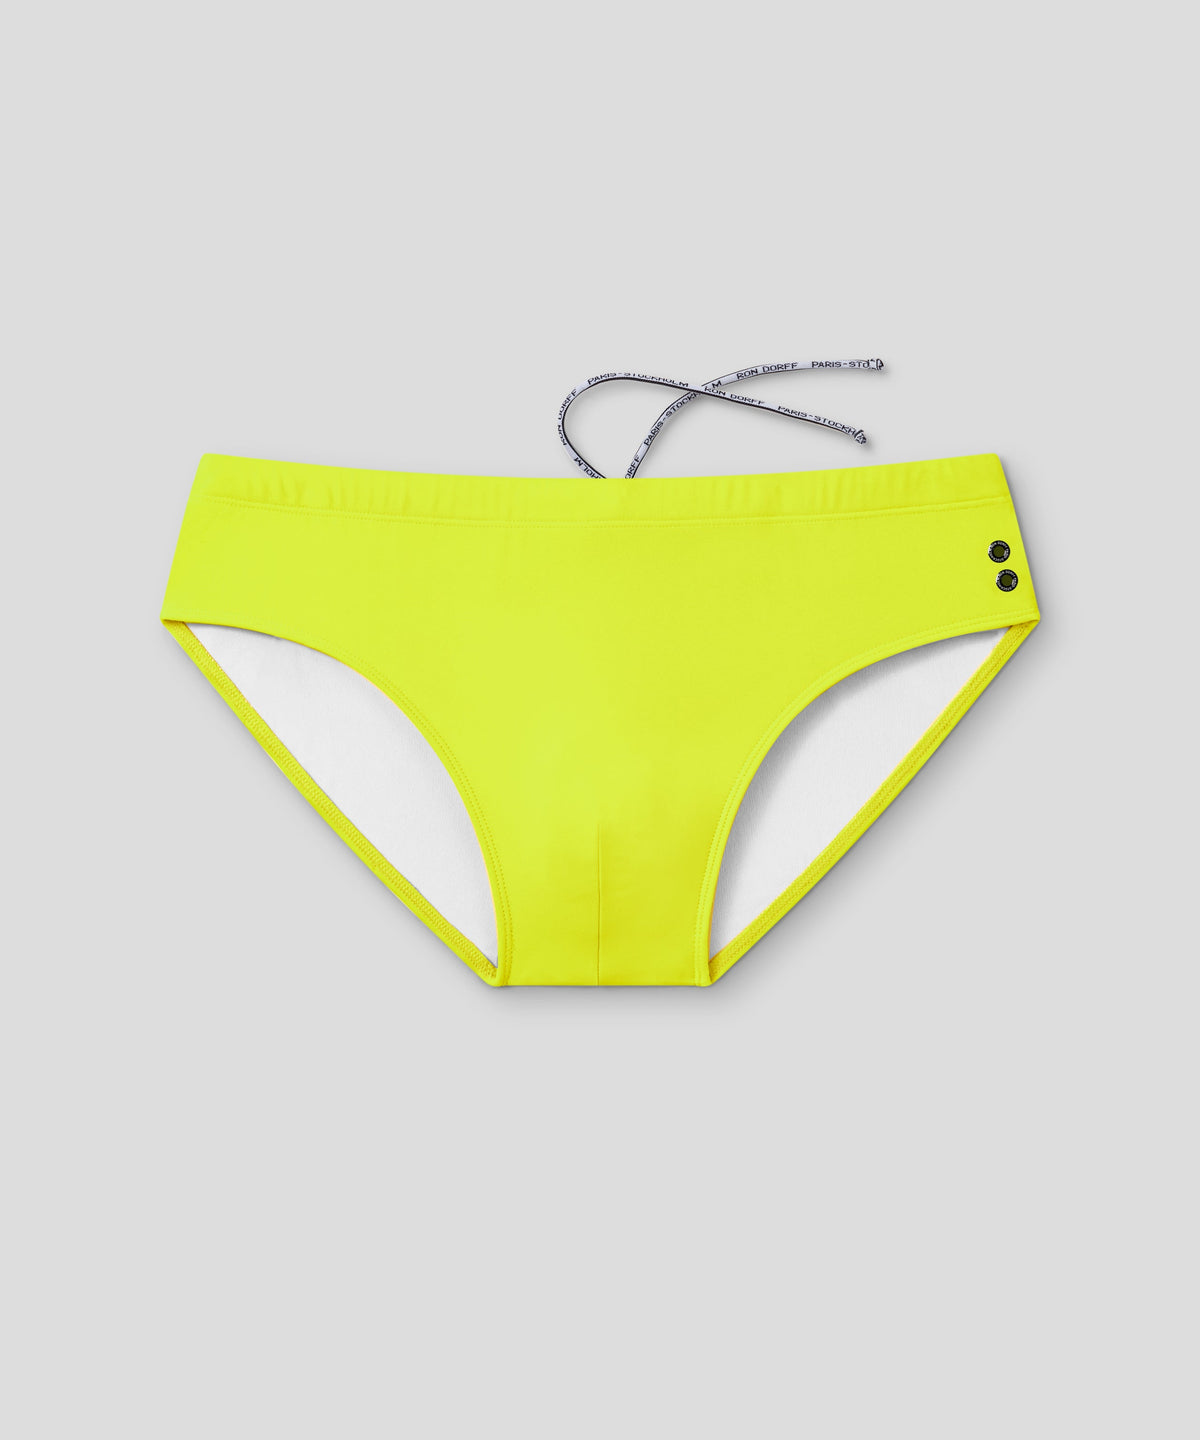 Swim Briefs: Neon Yellow